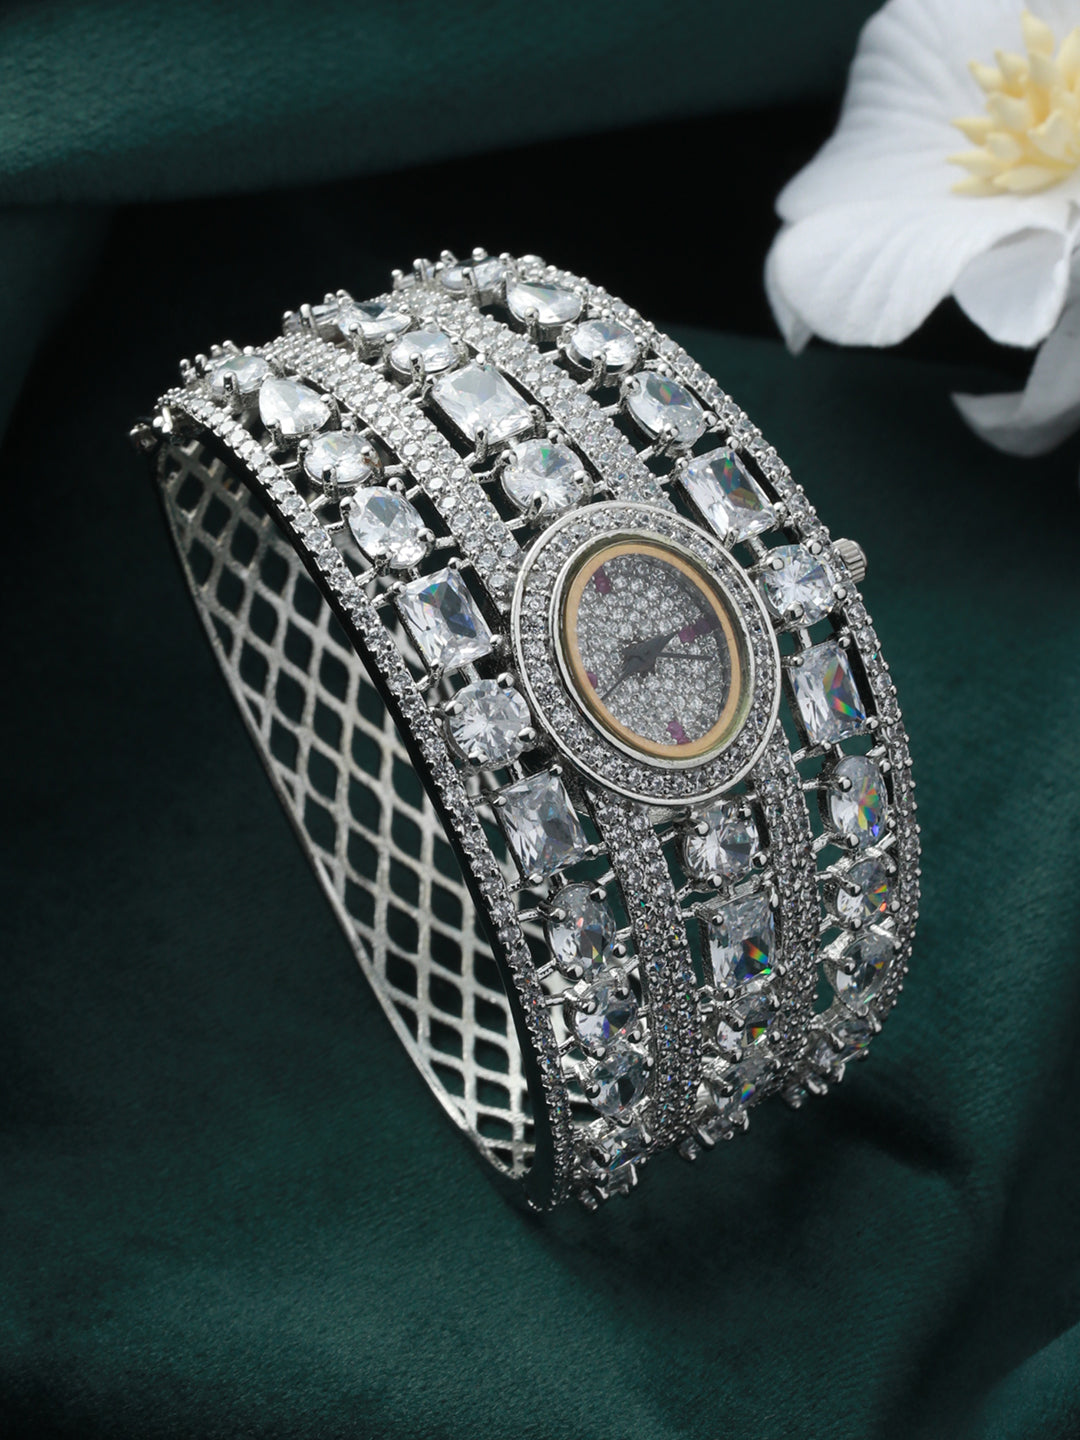 Elegant American Diamond Silver-Plated Bracelet Watch